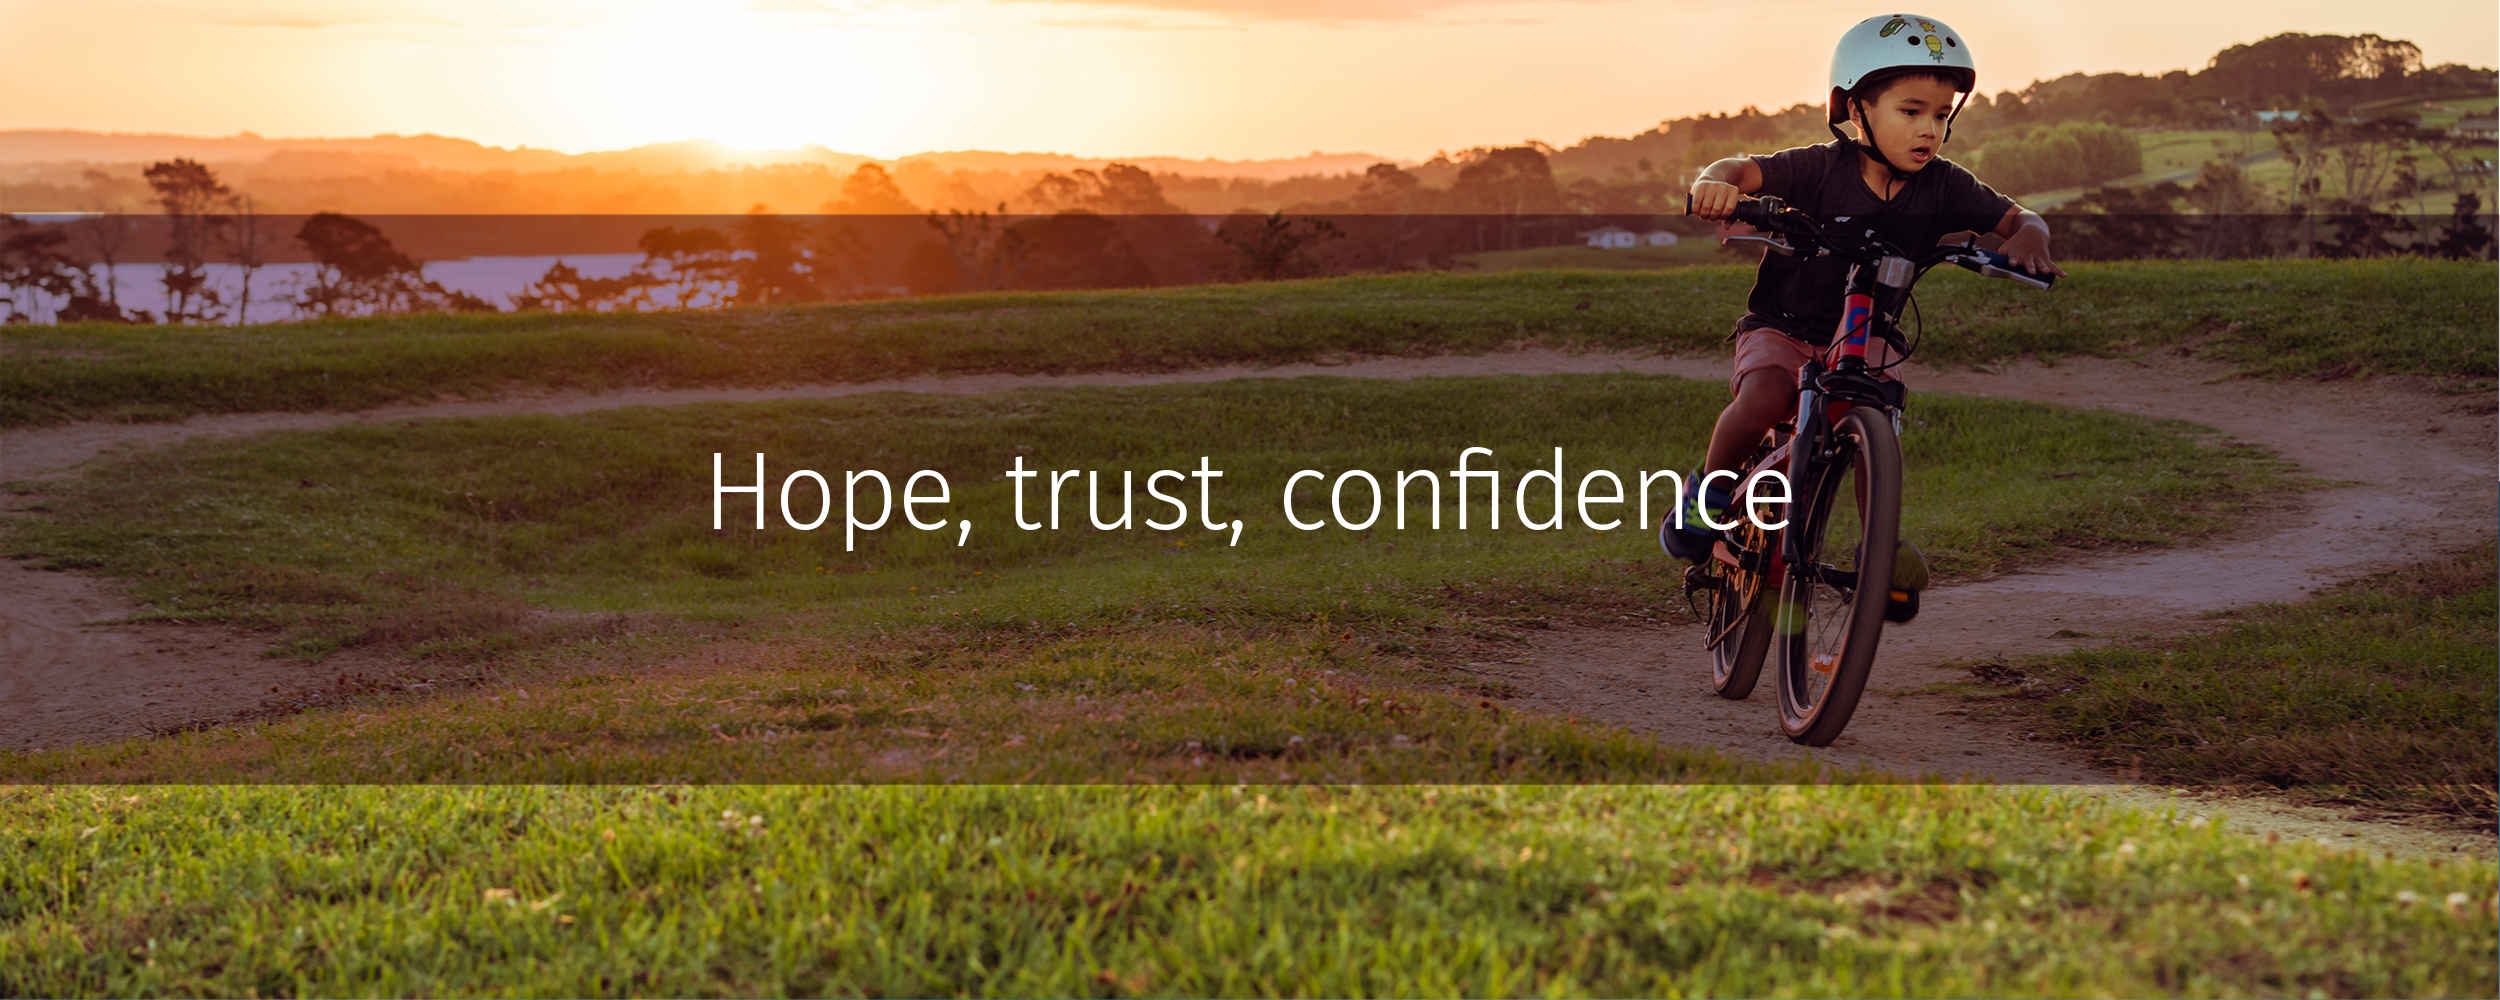 hope, trust, confidence